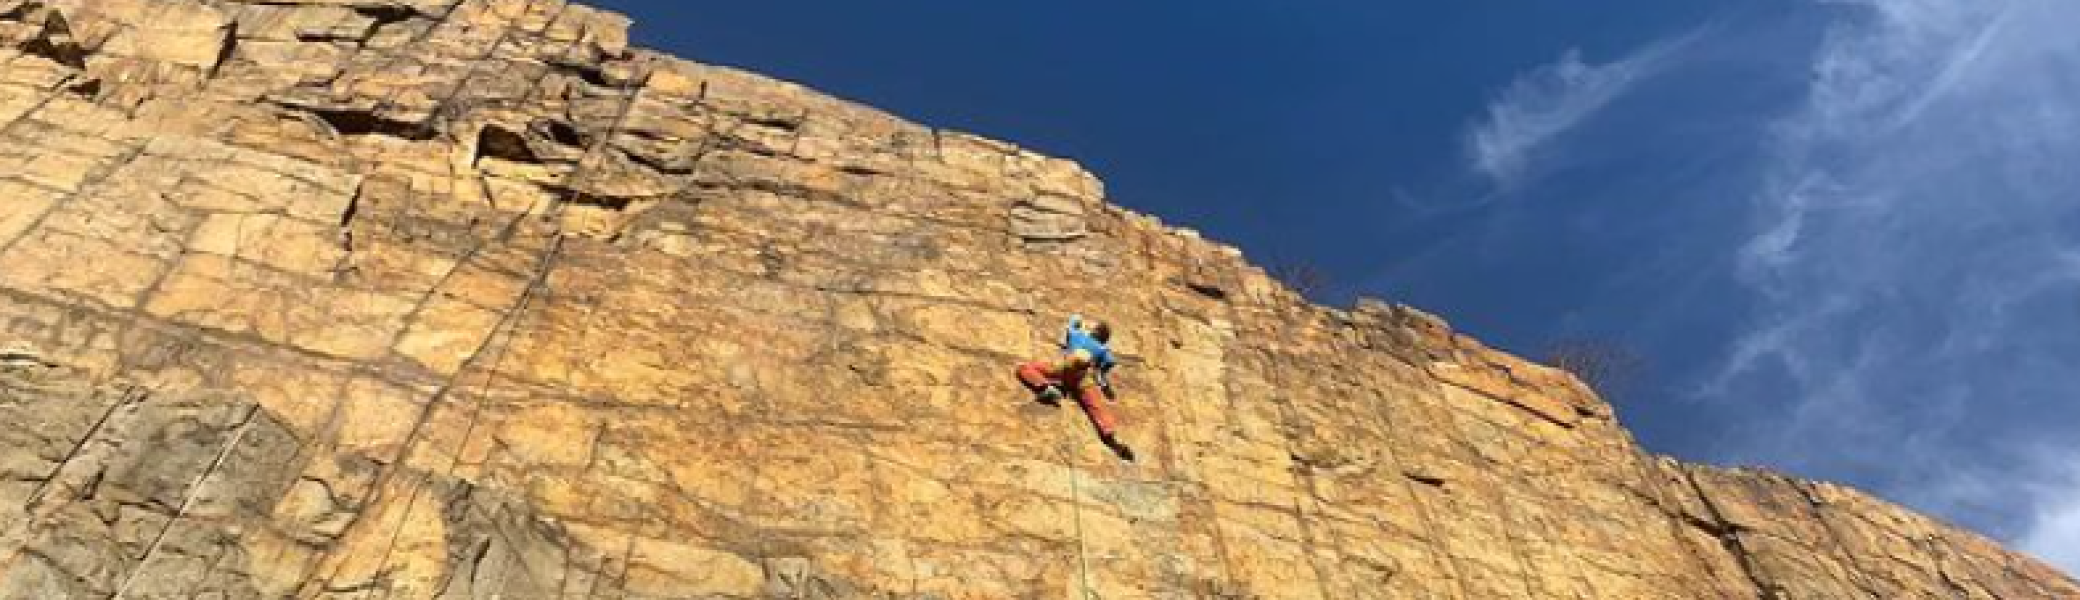 Kletternde Person in an Felswand | © Theodor Kubusch